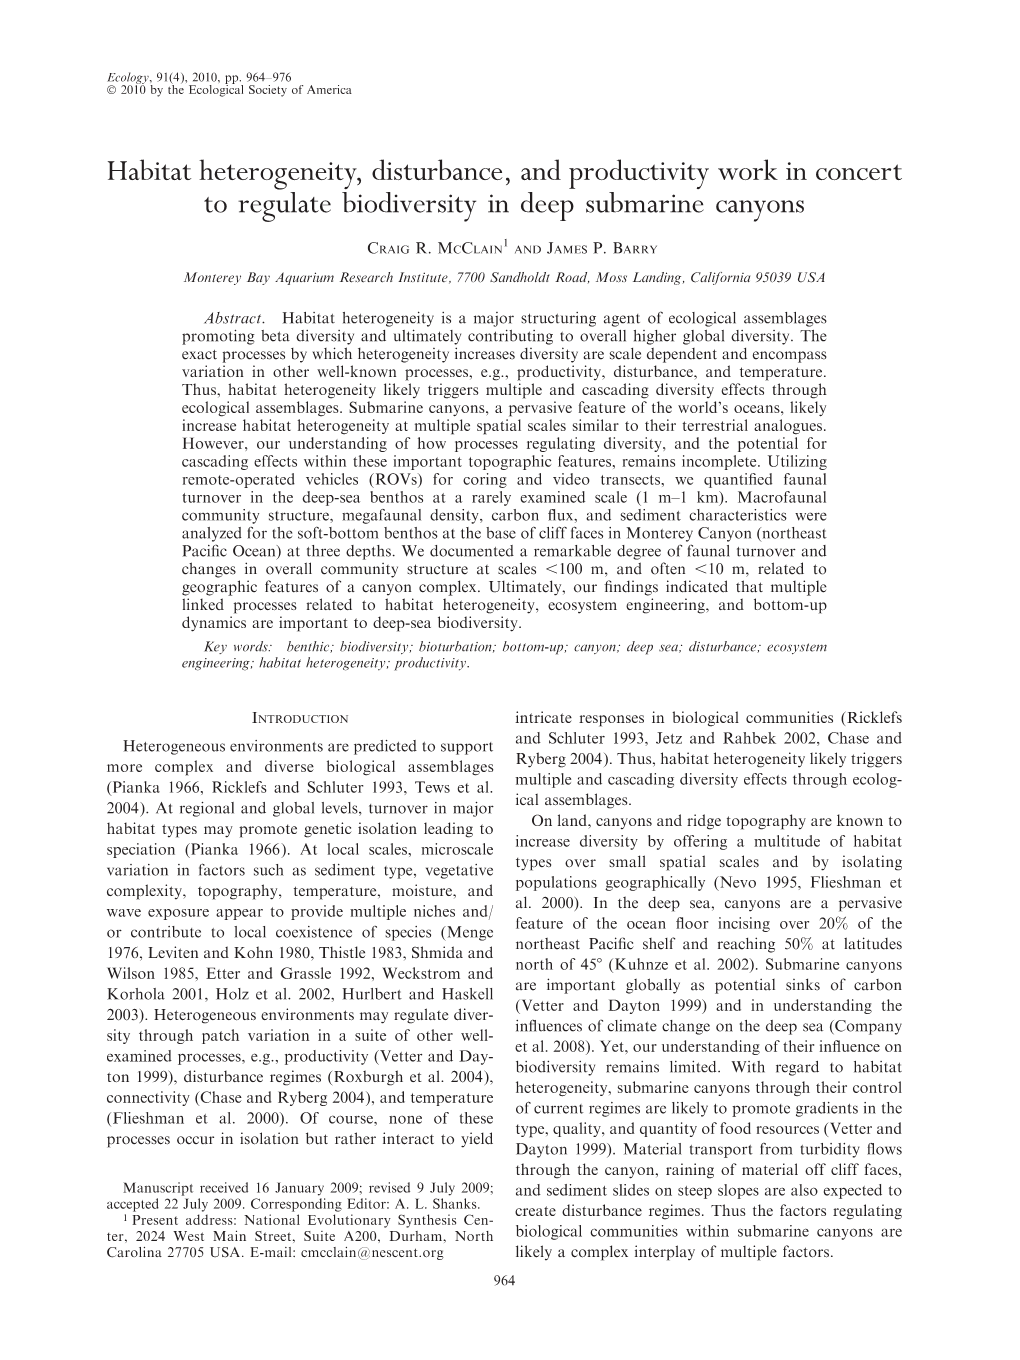 Habitat Heterogeneity, Disturbance, and Productivity Work in Concert to Regulate Biodiversity in Deep Submarine Canyons